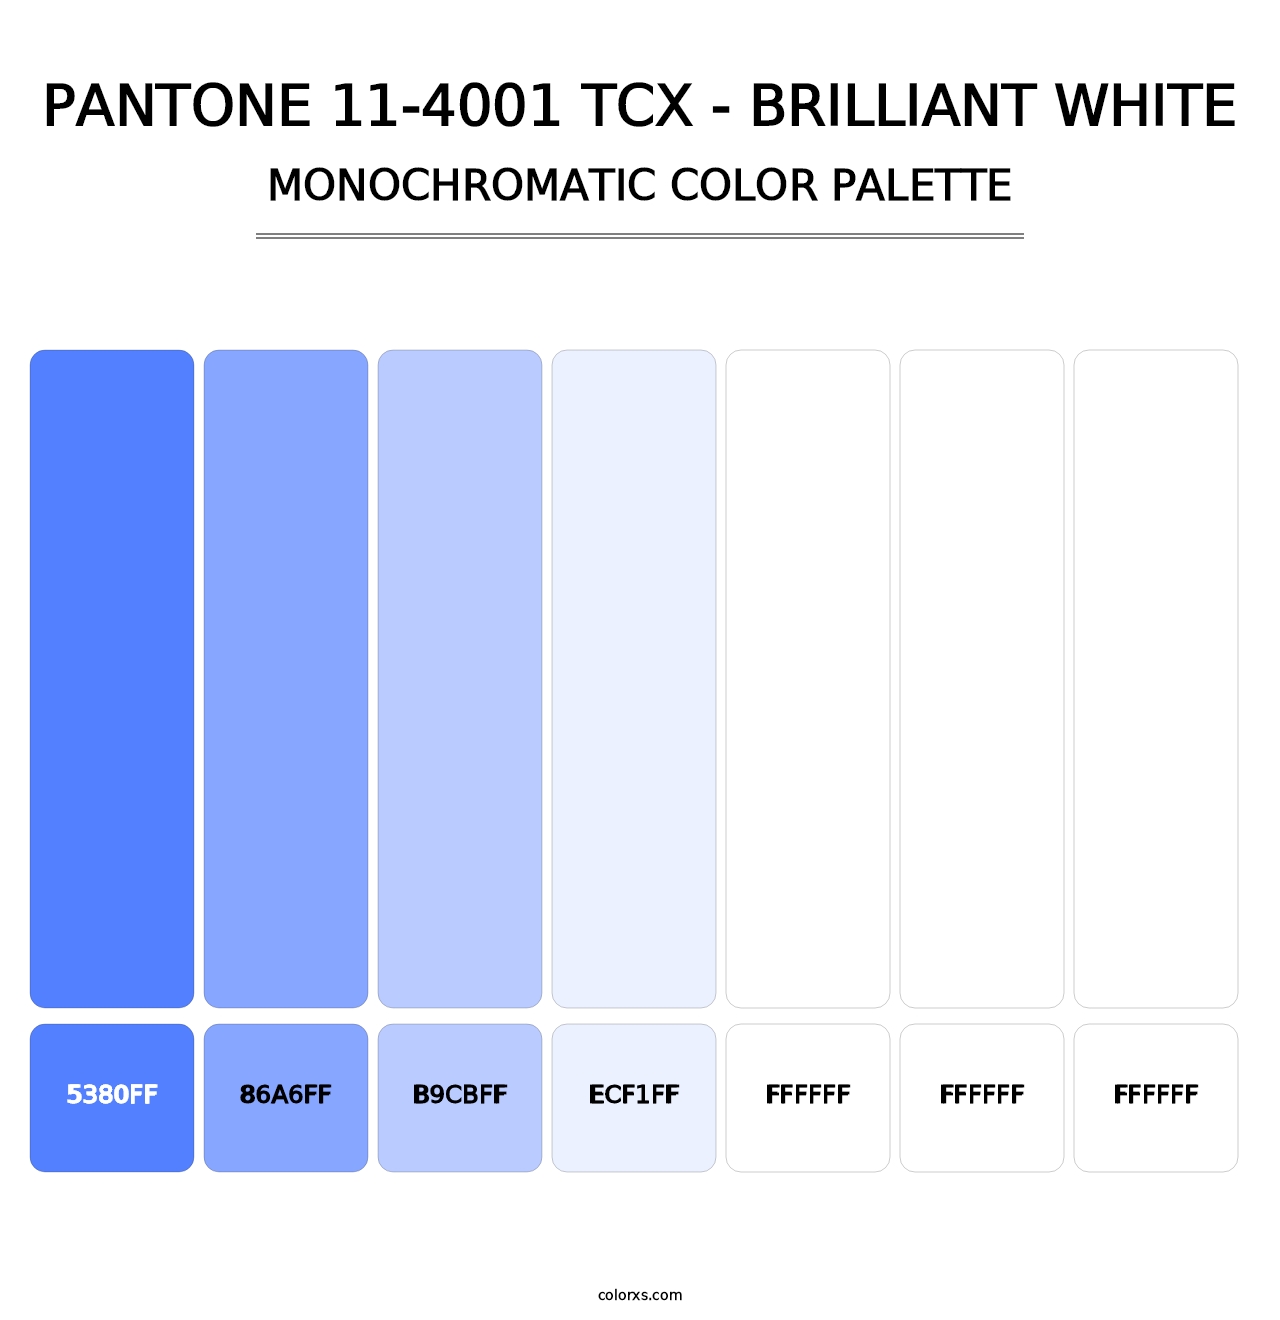 PANTONE 11-4001 TCX - Brilliant White - Monochromatic Color Palette